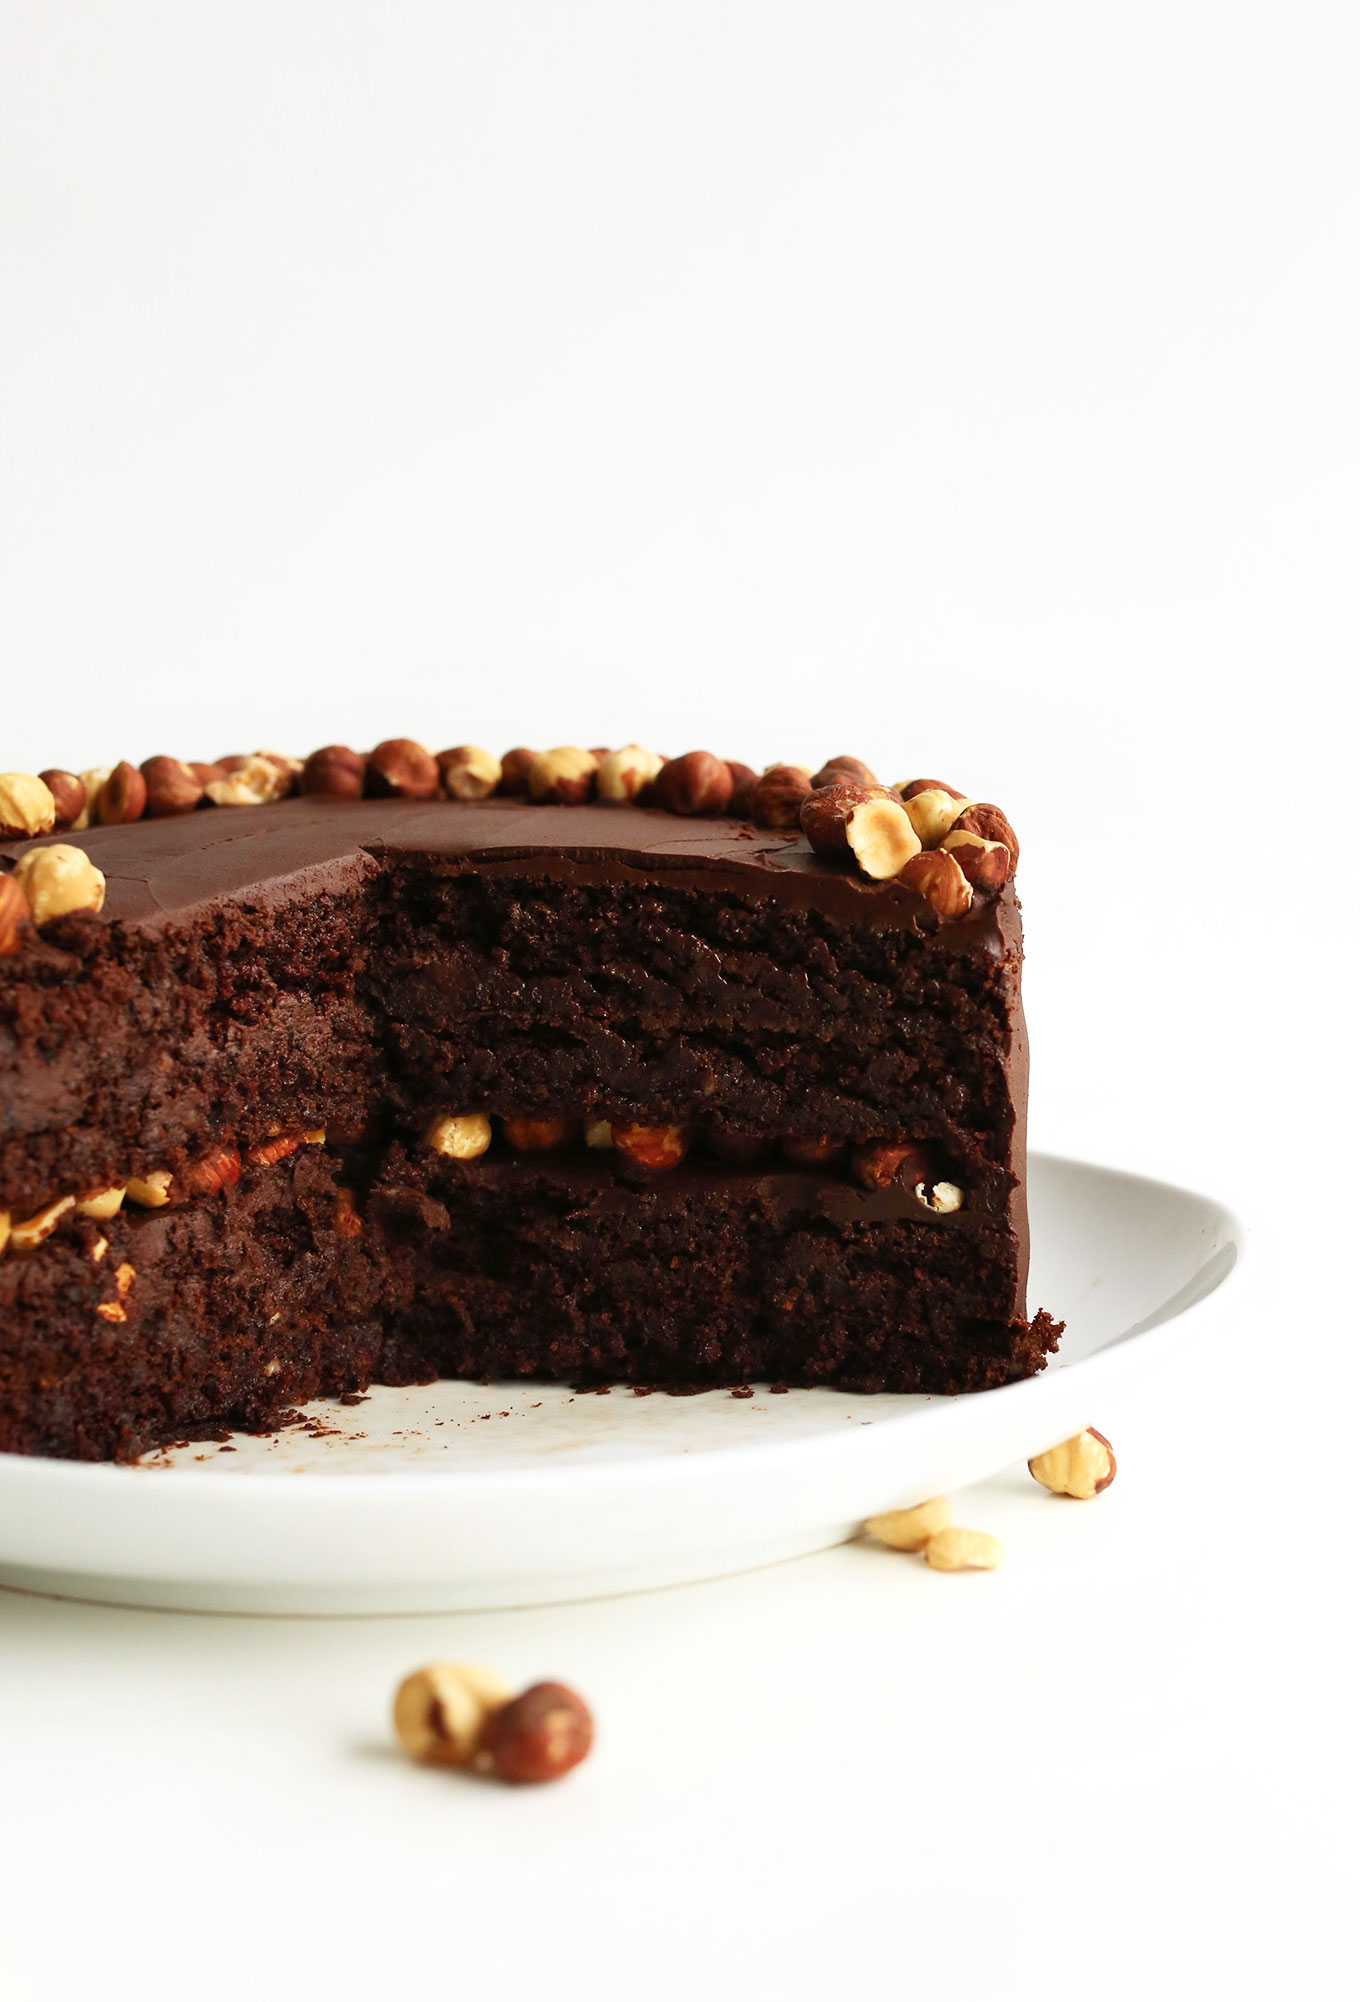 Layered delicious Vegan GF Chocolate Hazelnut Cake for a special dessert